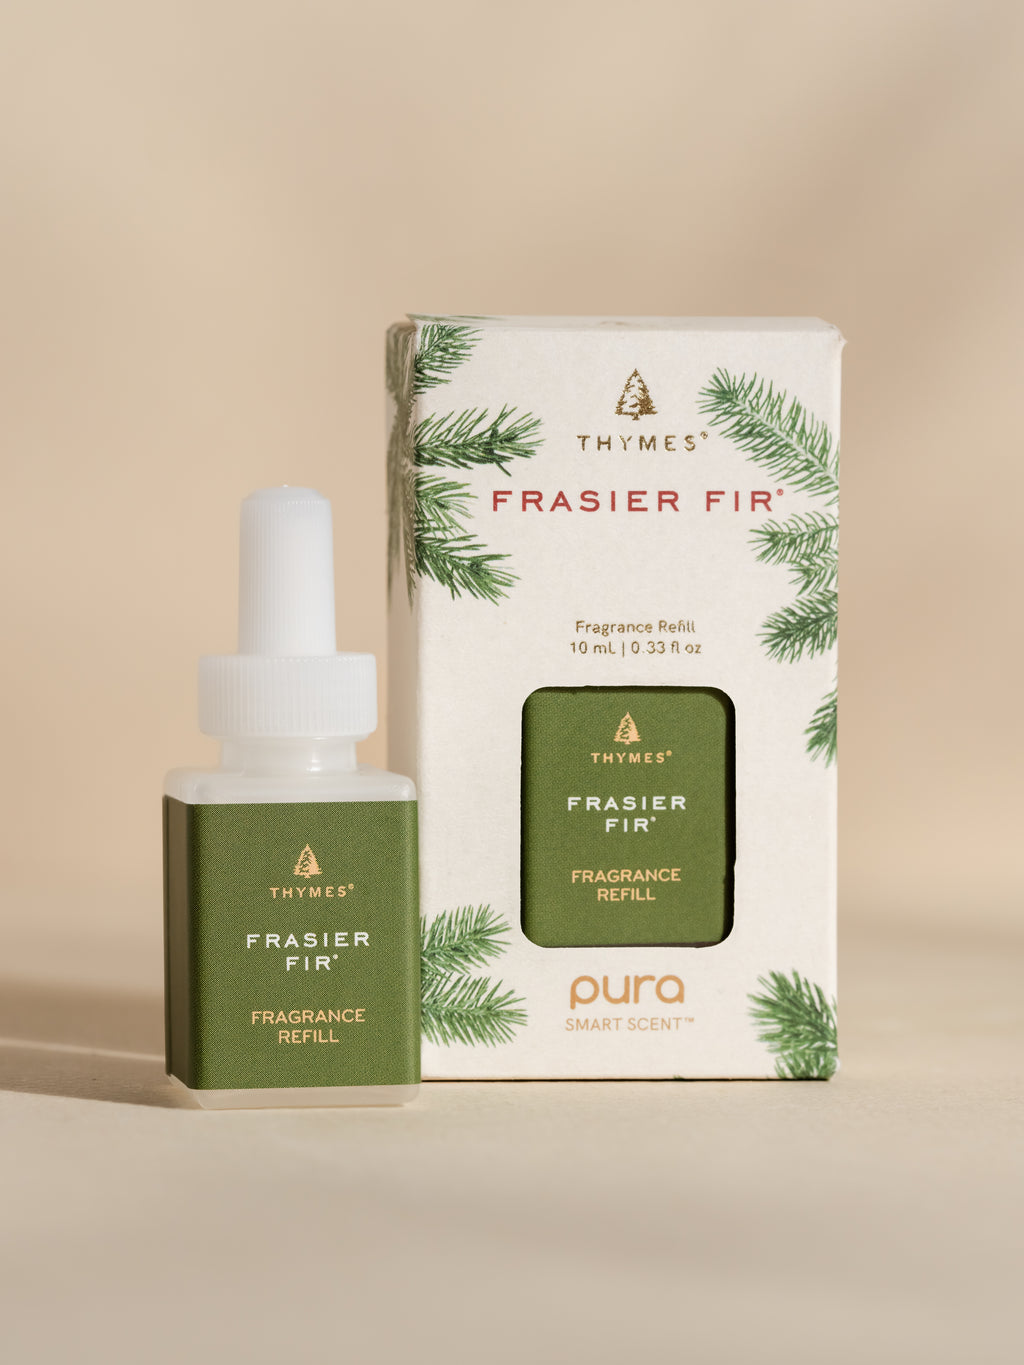  SLK Aroma - Fraser FIR Aroma Oil for Diffusers - The